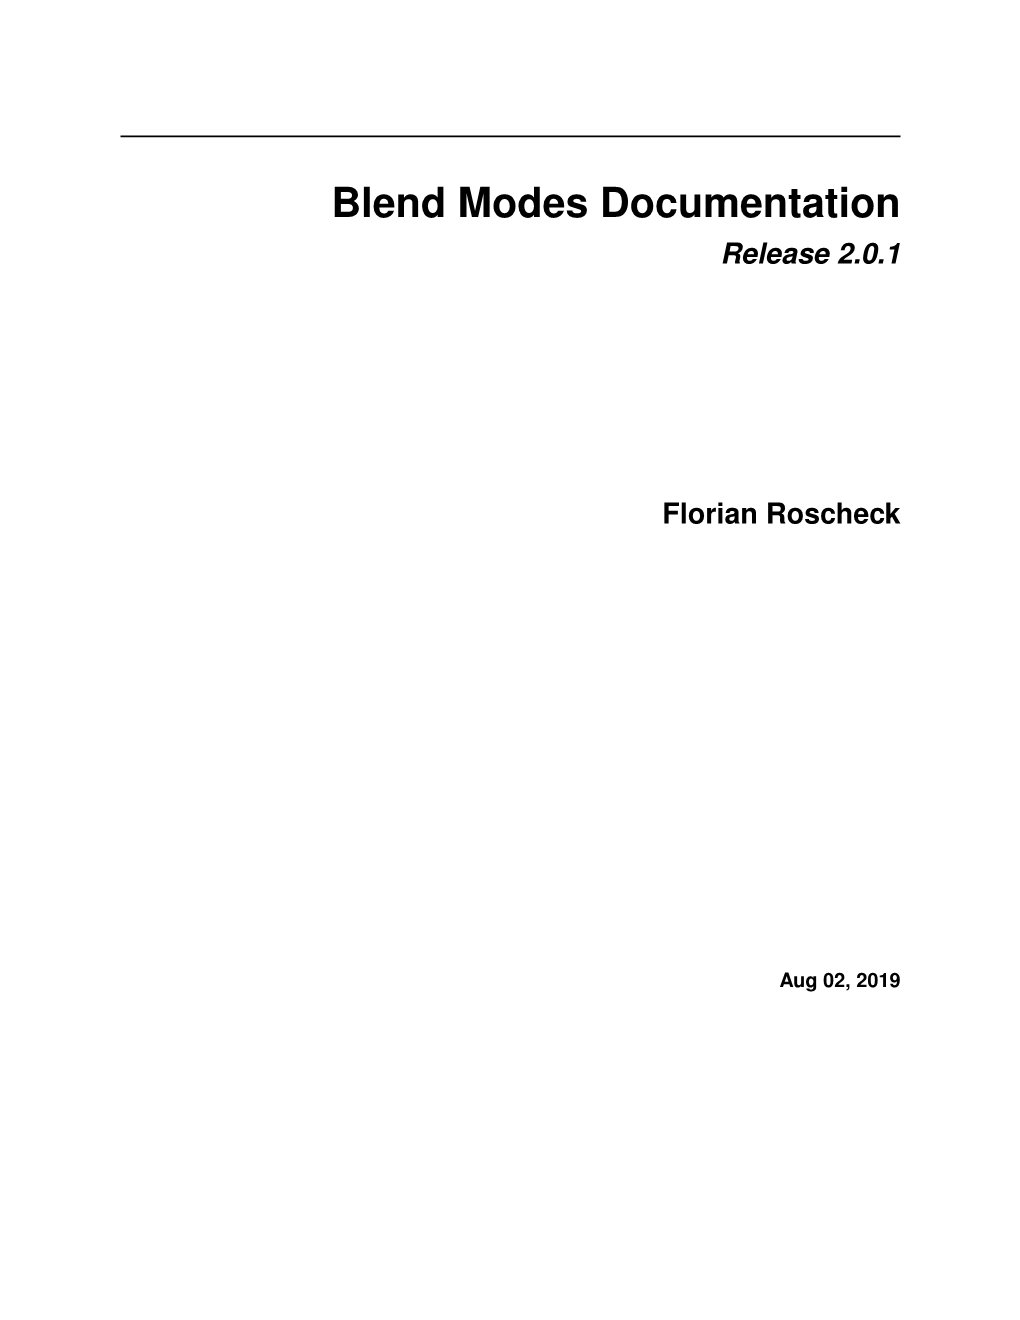 Blend Modes Documentation Release 2.0.1